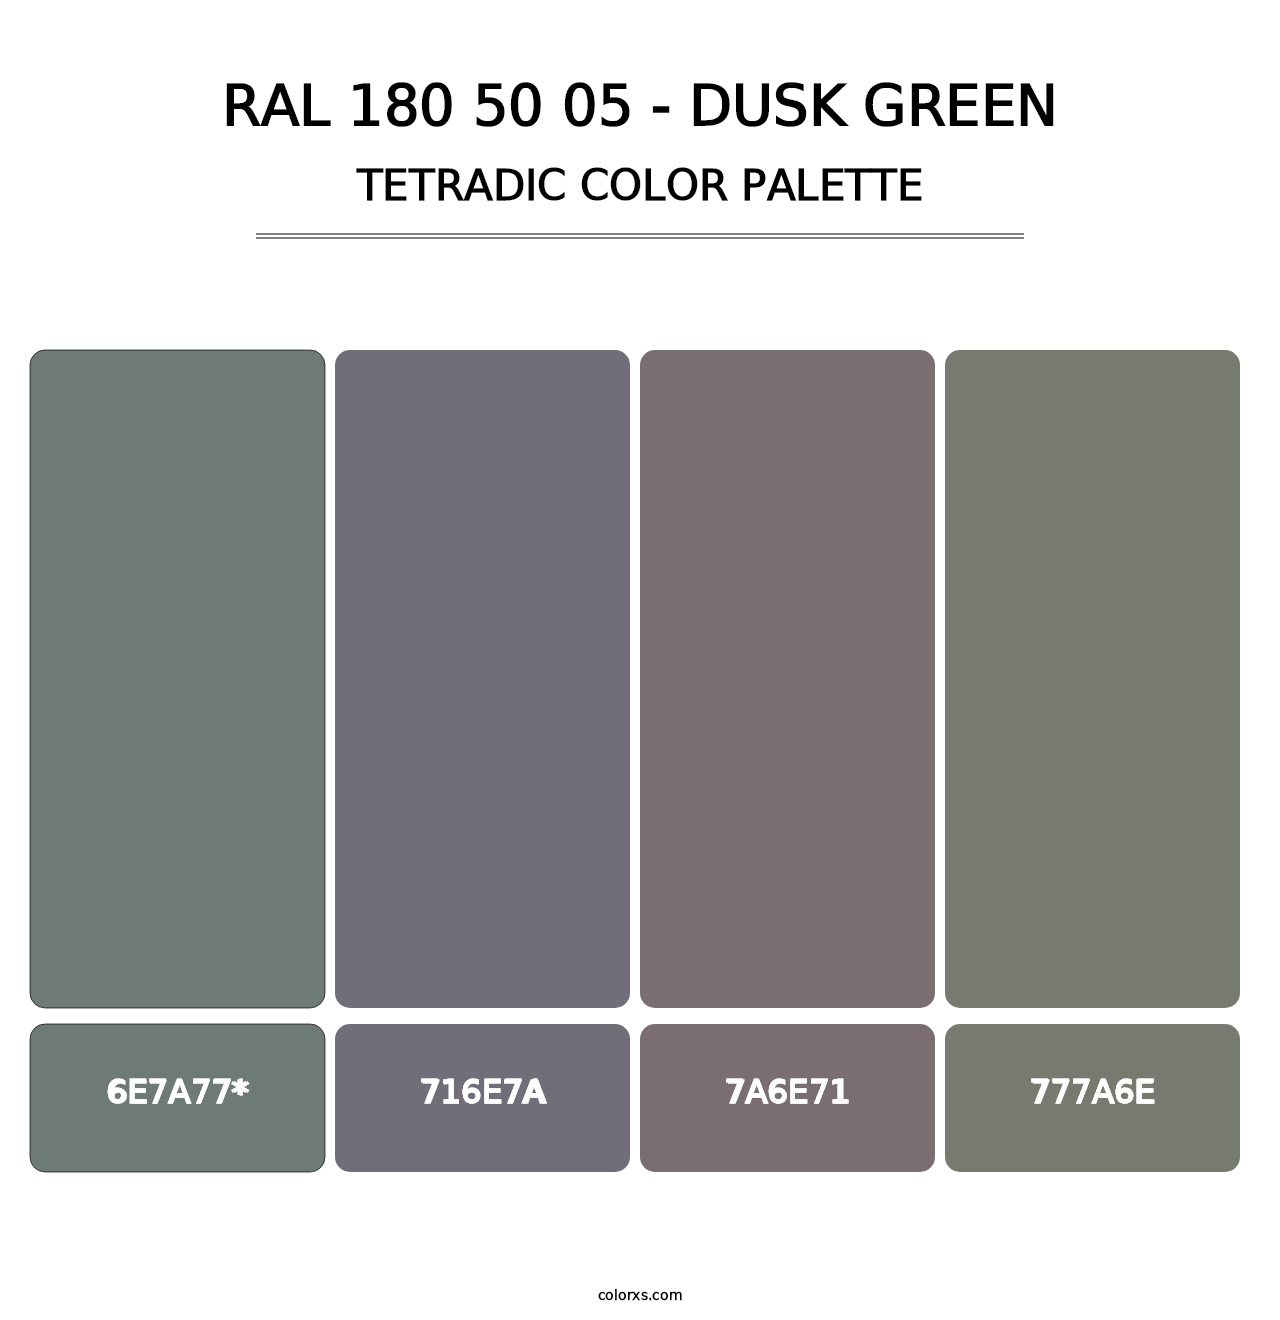 RAL 180 50 05 - Dusk Green - Tetradic Color Palette